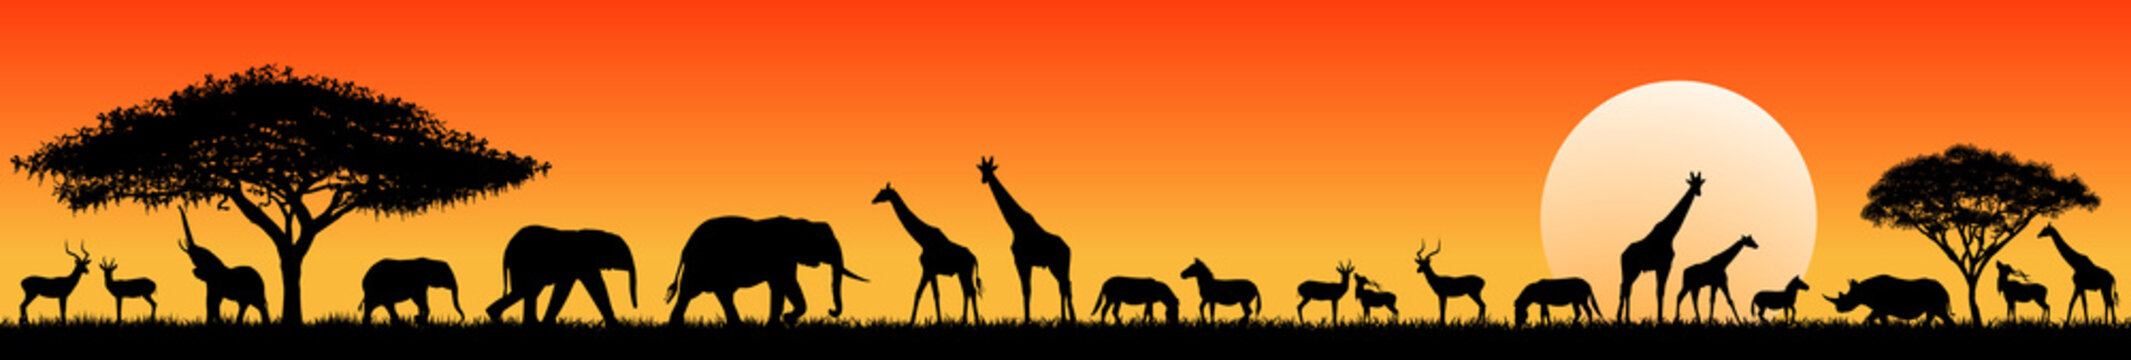 African savanna animals at sunset. Silhouettes of wild animals of the African savannah